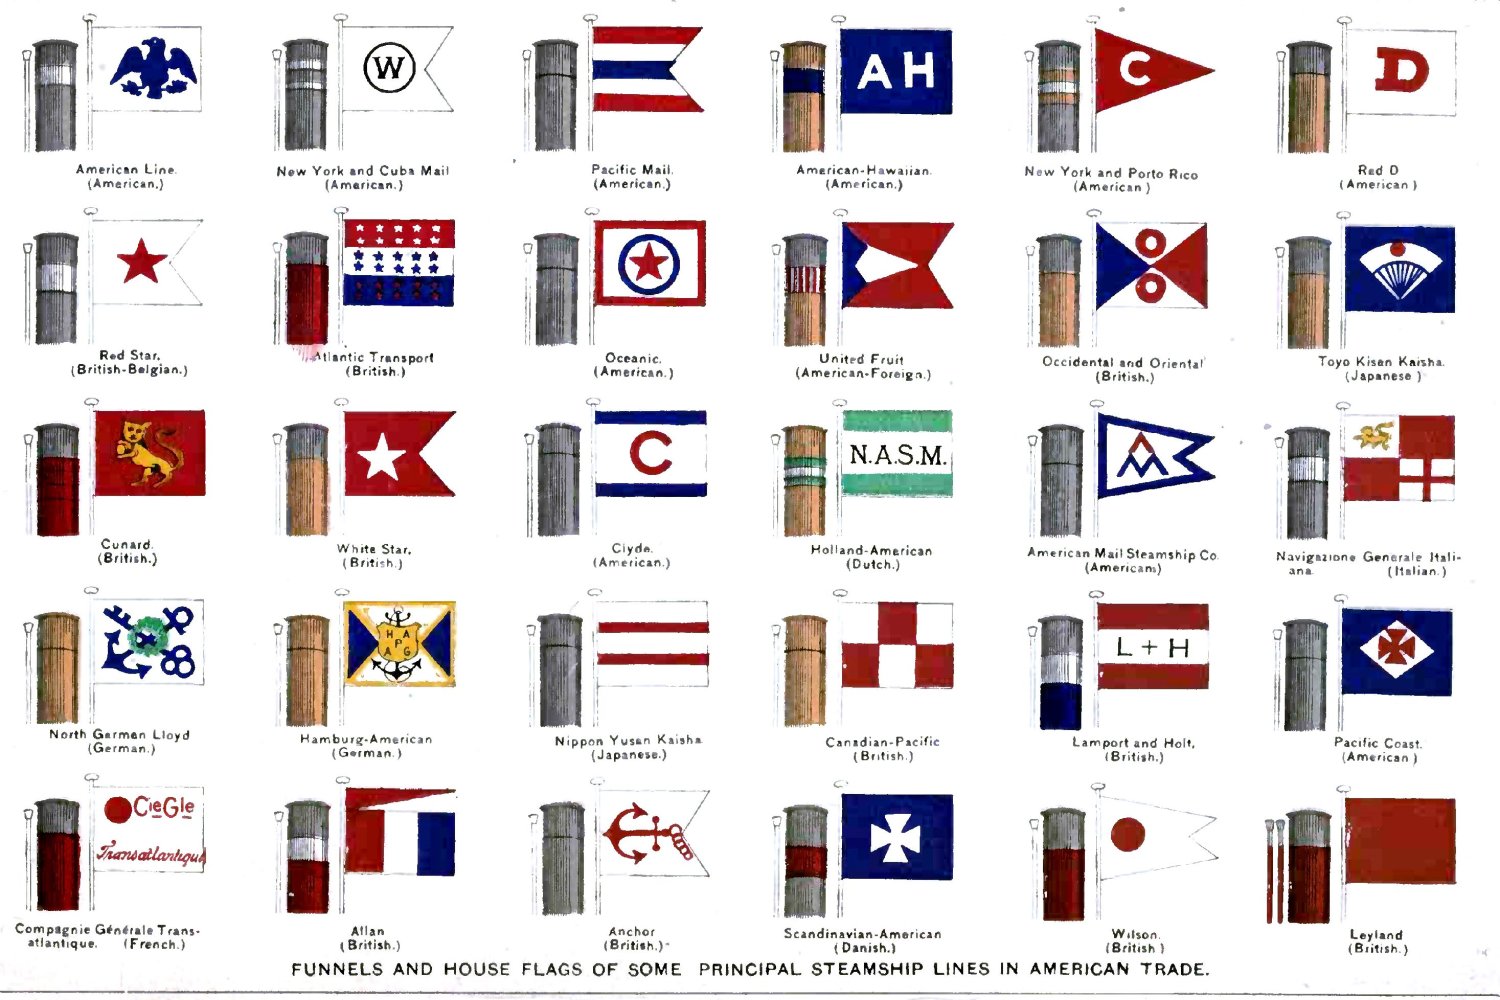 House_flags_1900 (1).jpg